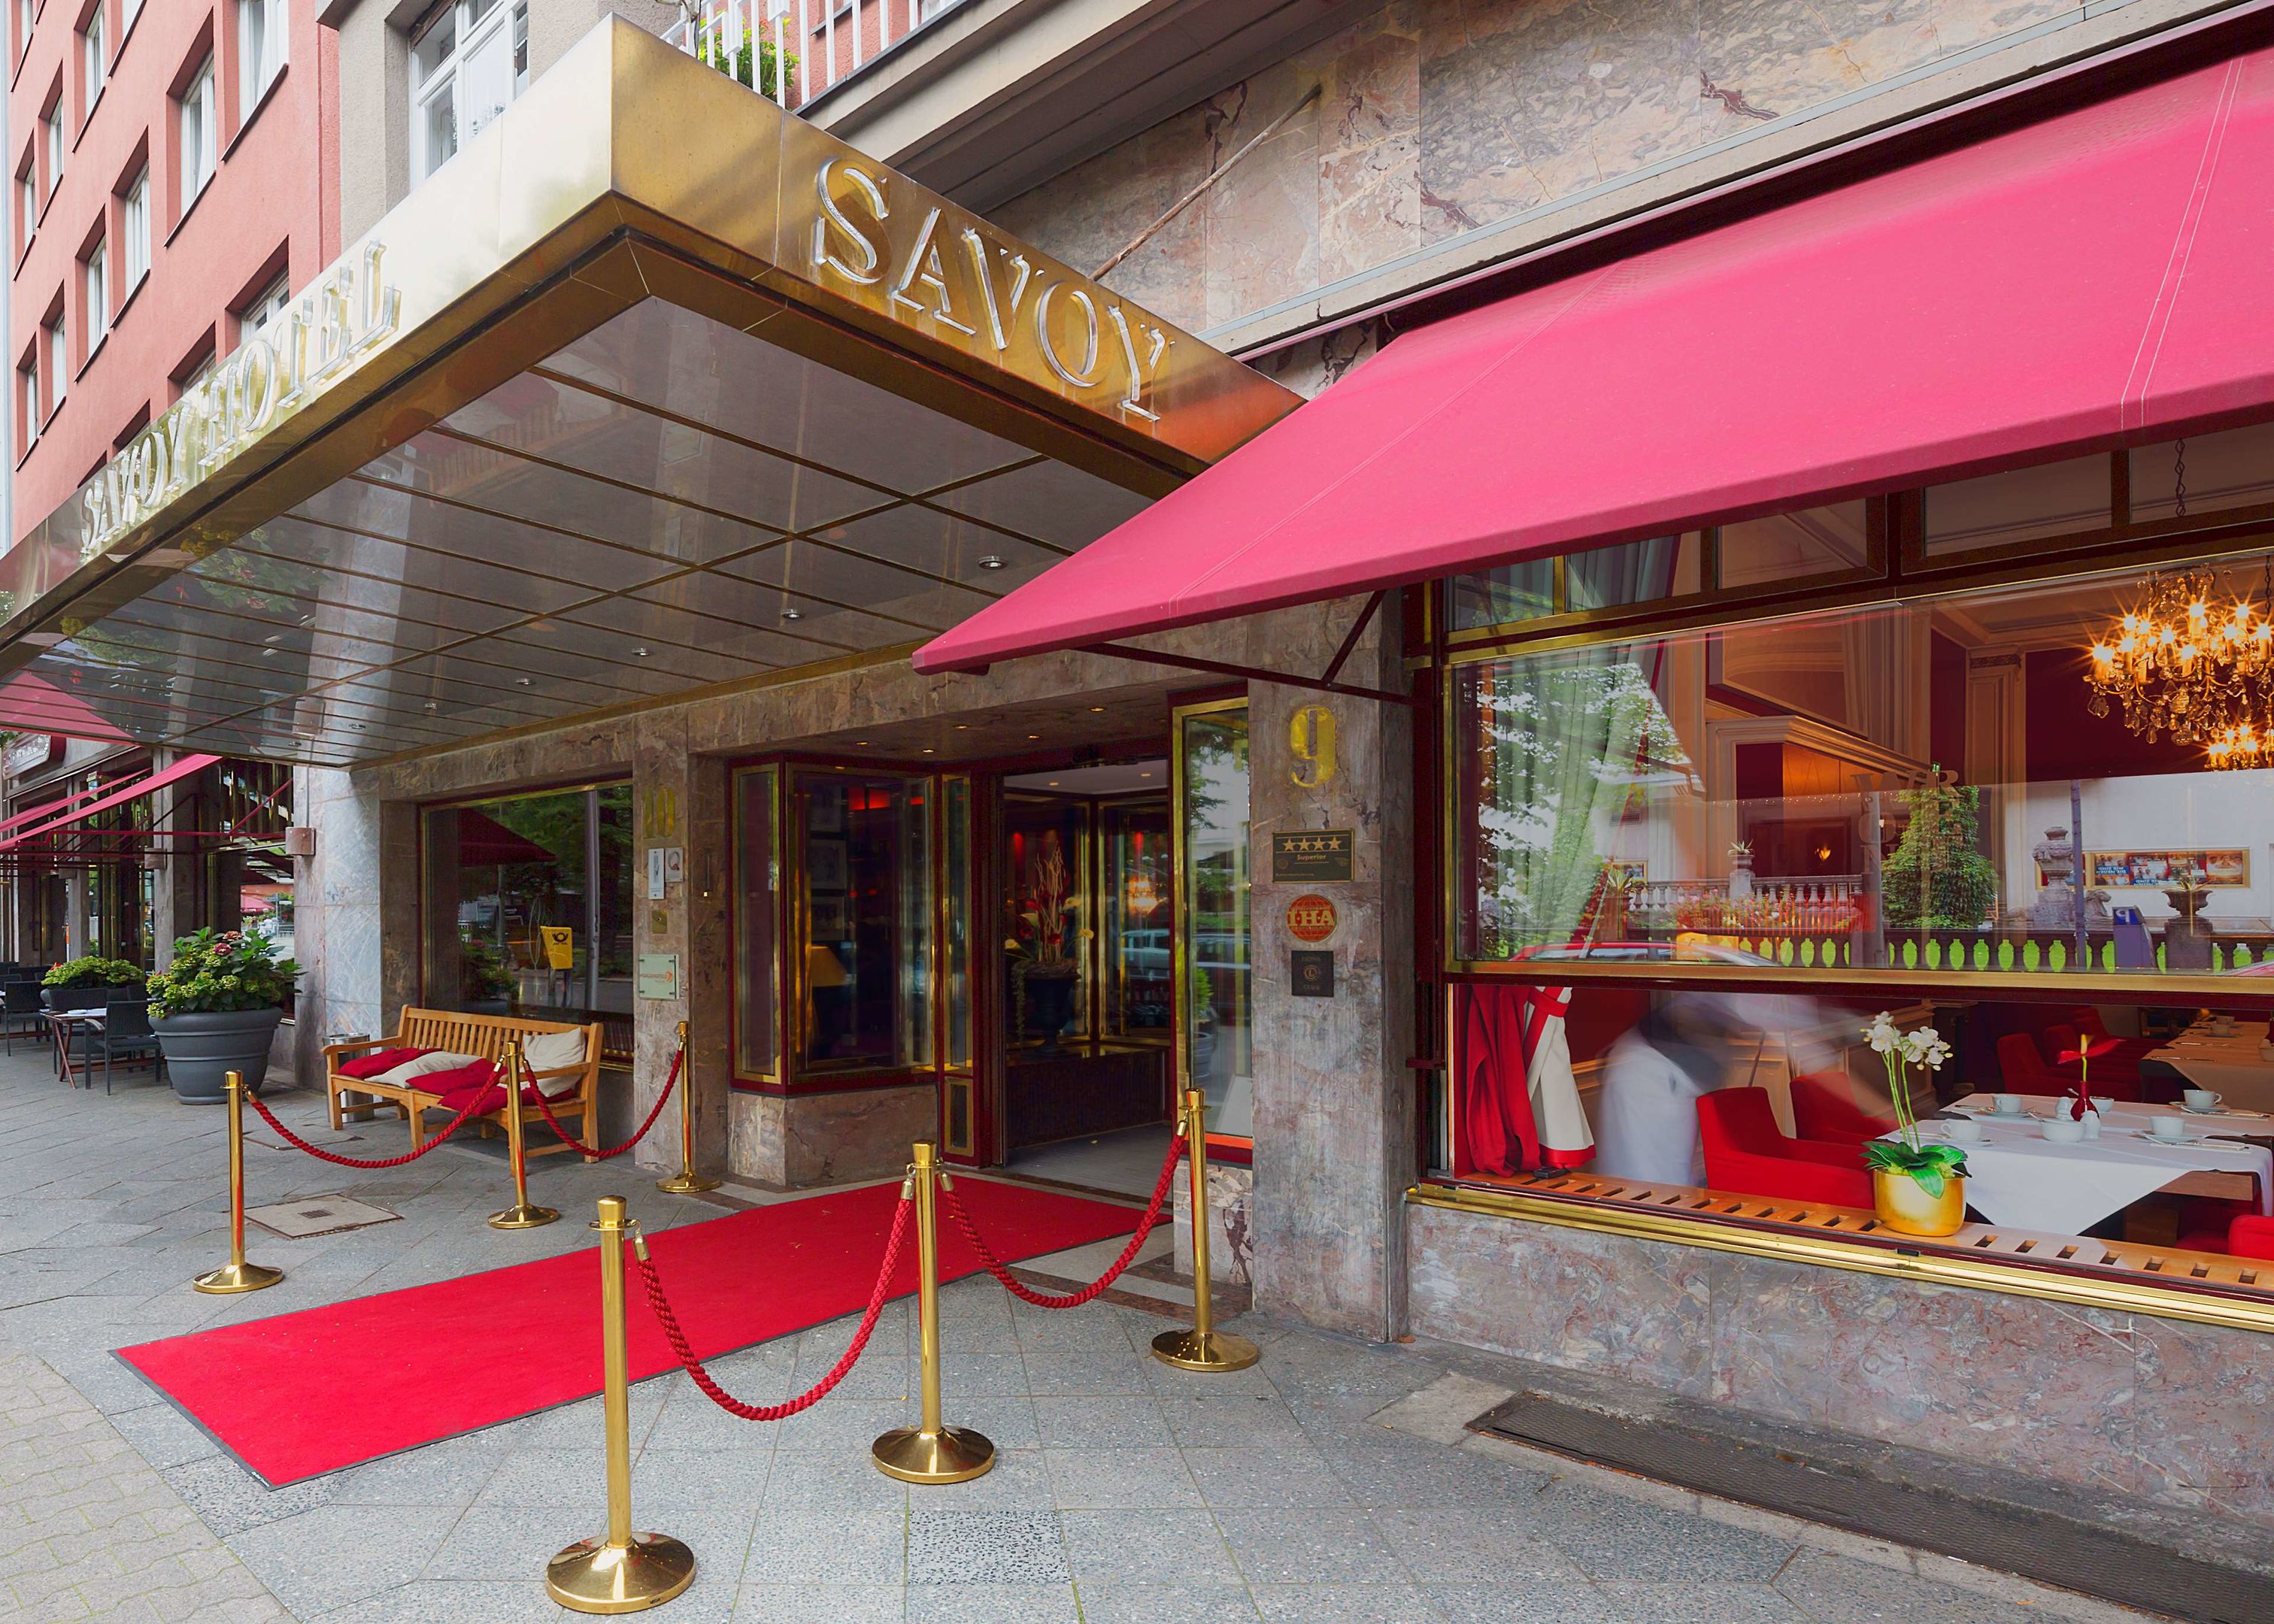 Savoy Hotel Berlin